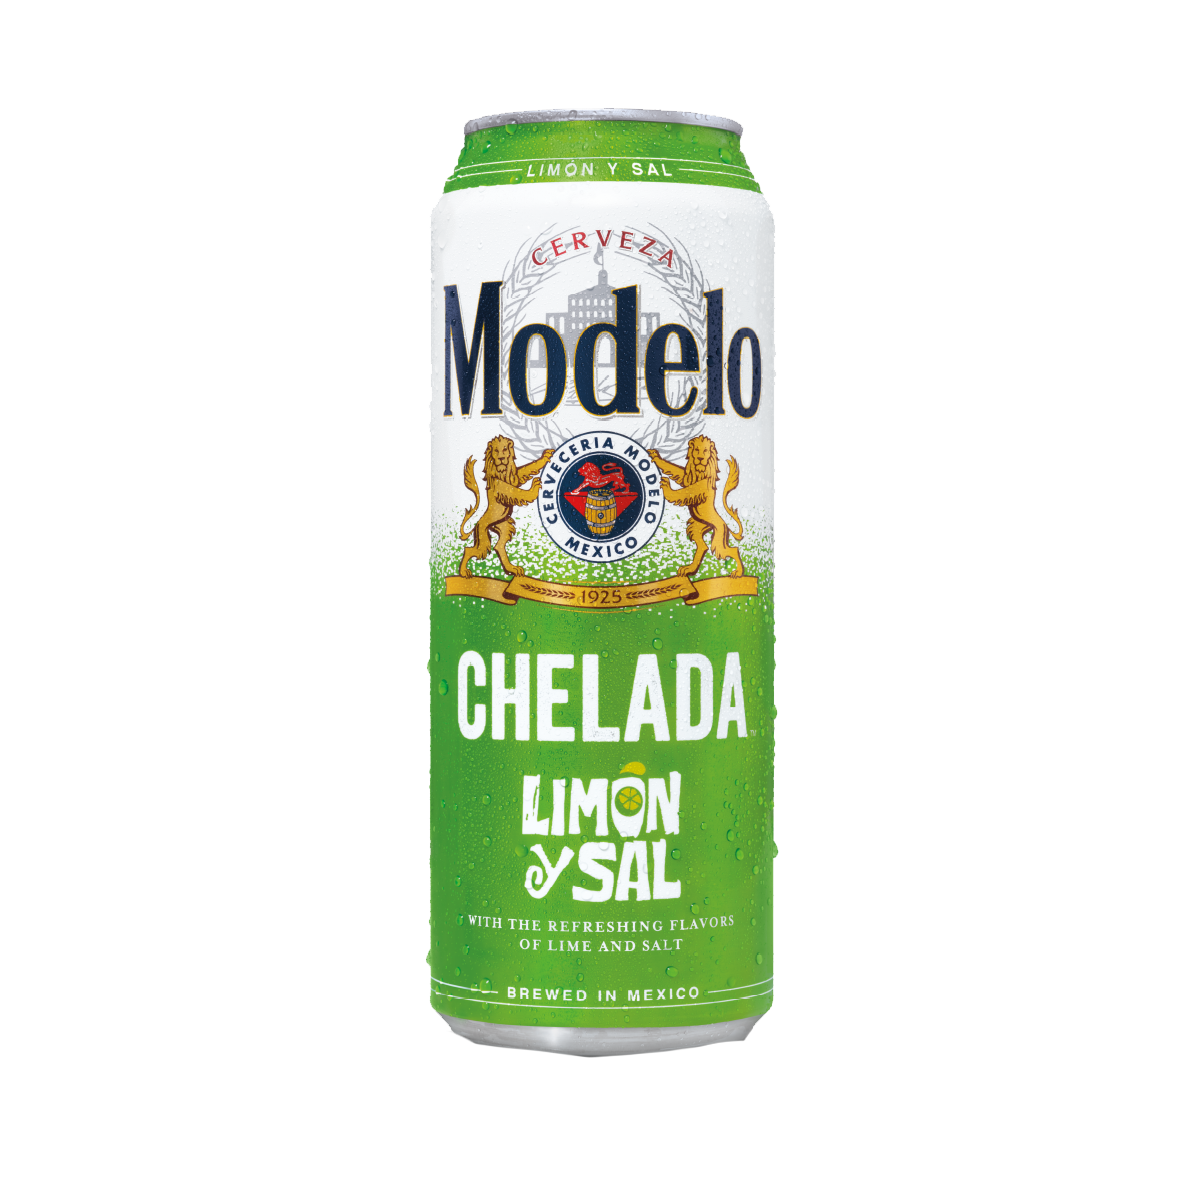 Chelada Limon y Sal